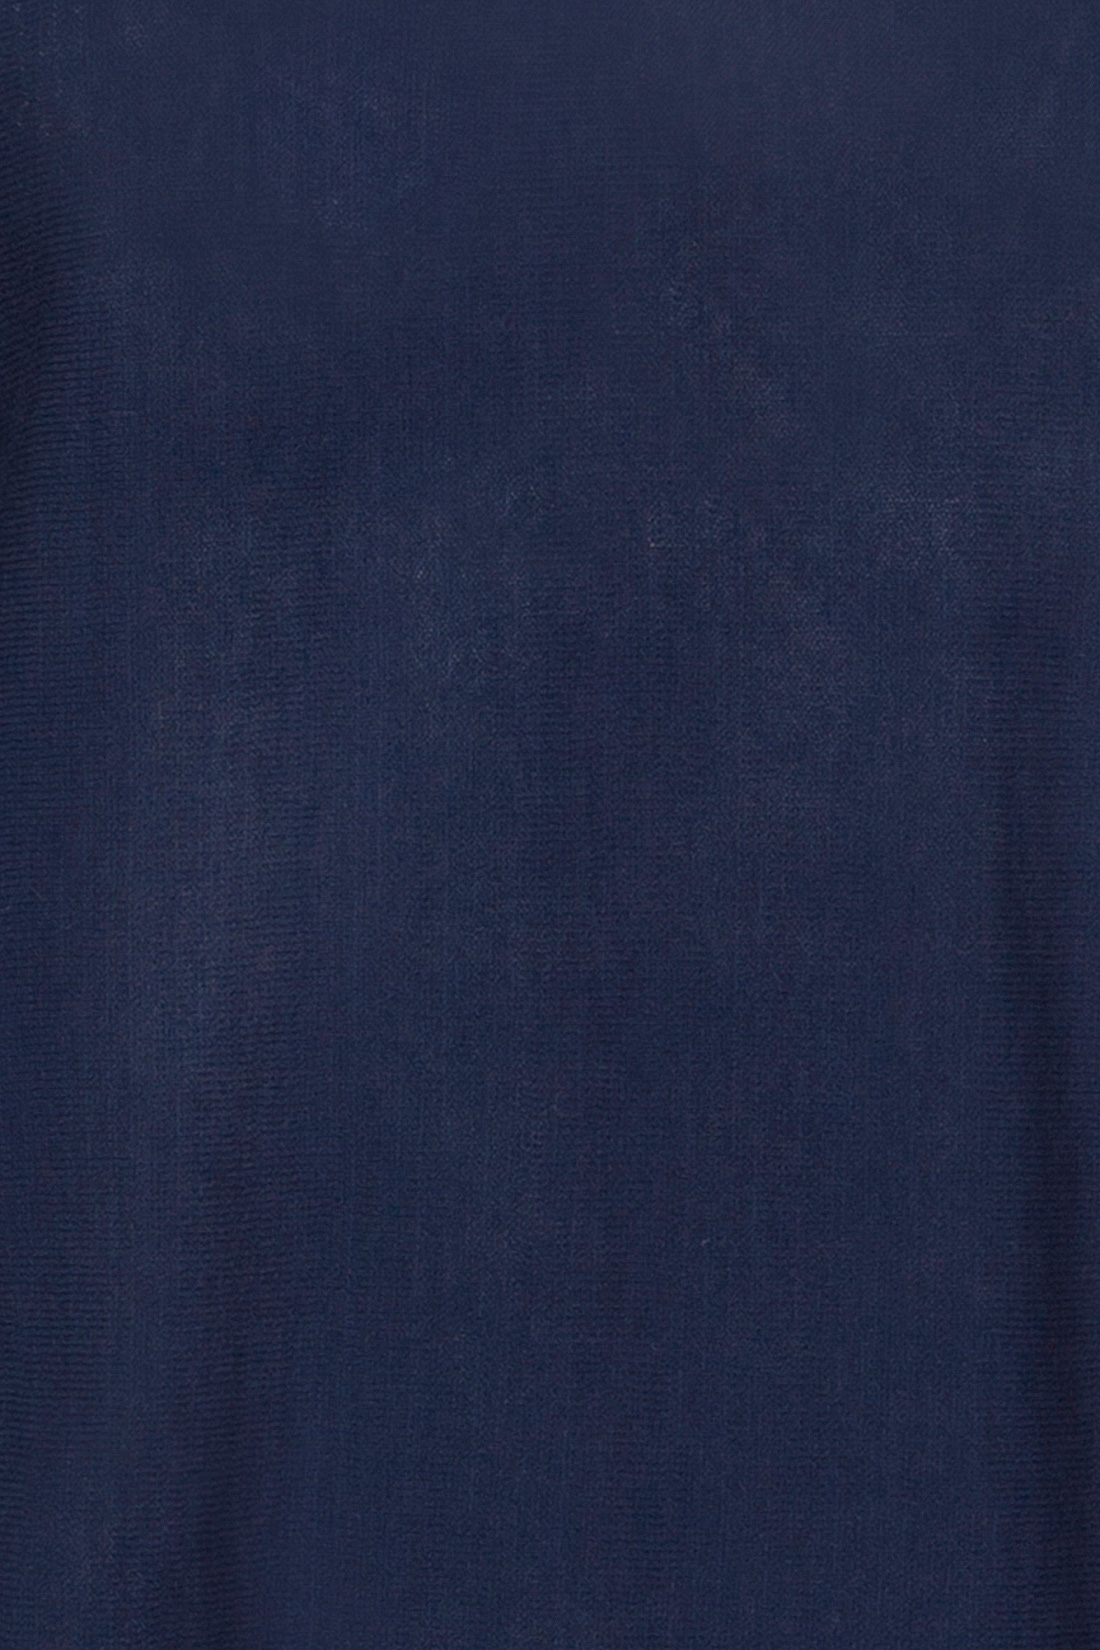 Джемпер с цельнокроенными рукавами (арт. baon B137036), размер XXL, цвет синий Джемпер с цельнокроенными рукавами (арт. baon B137036) - фото 3